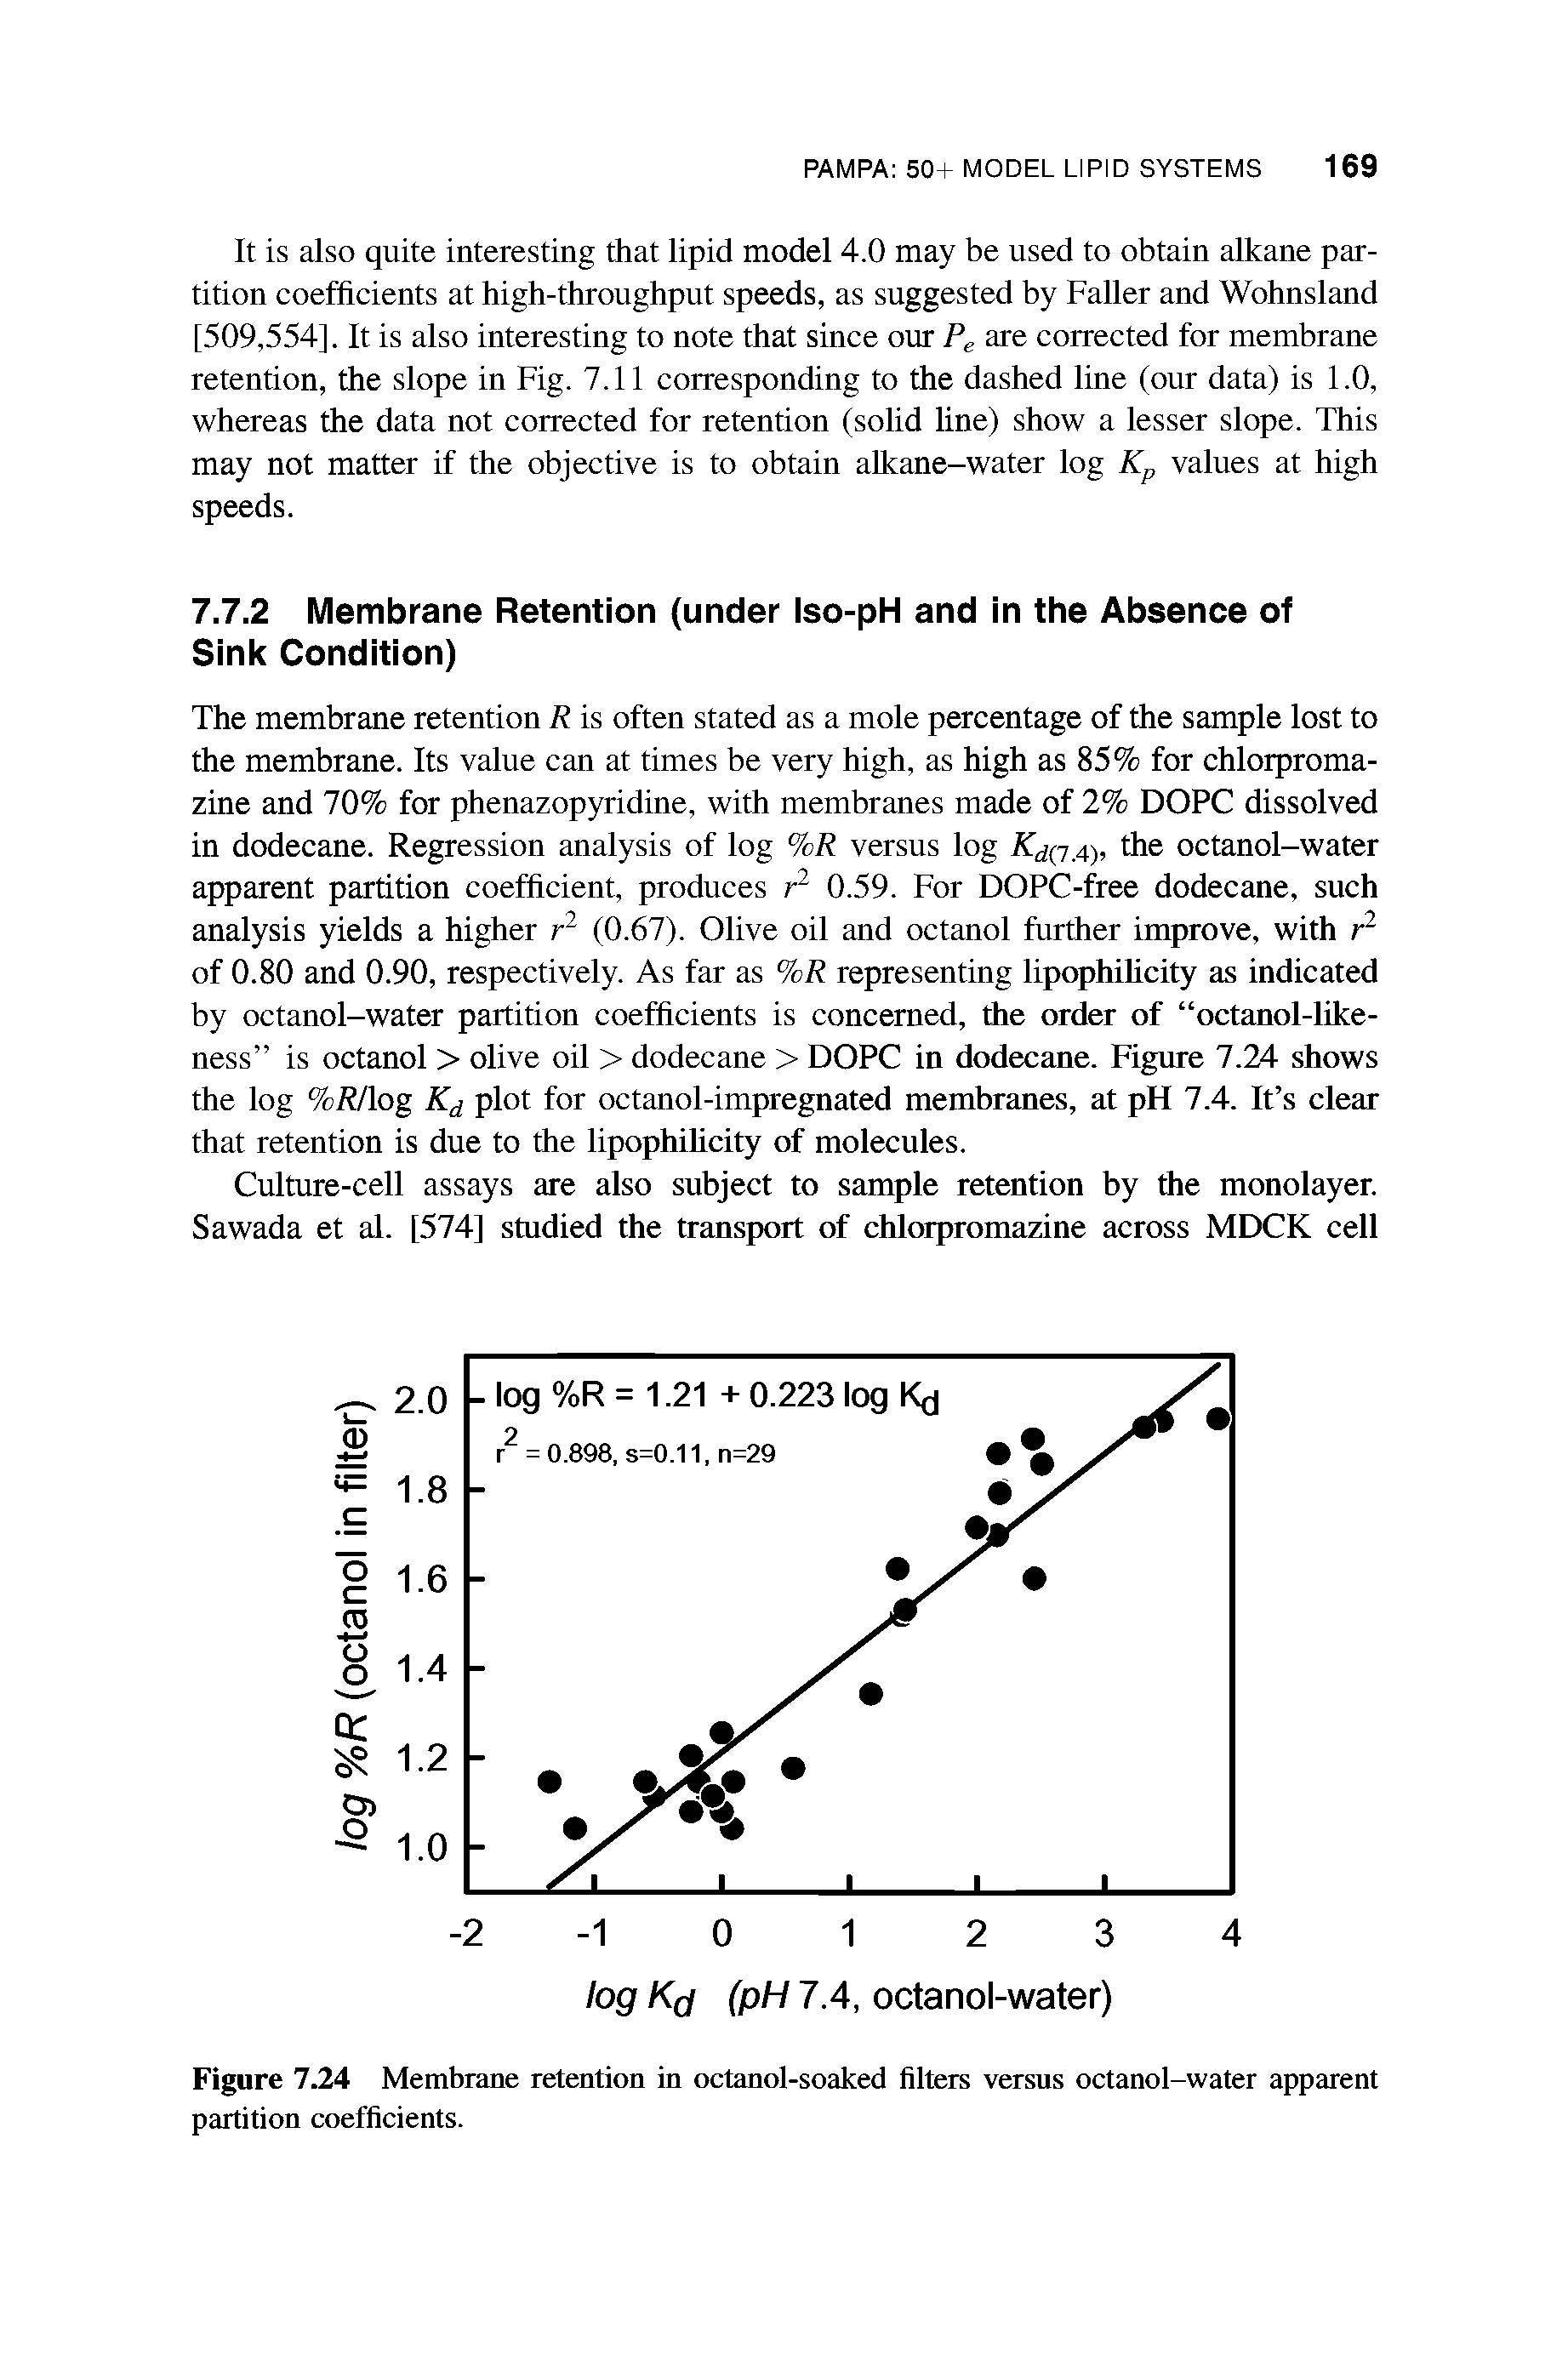 Figure 7.24 Membrane retention in octanol-soaked filters versus octanol-water apparent partition coefficients.